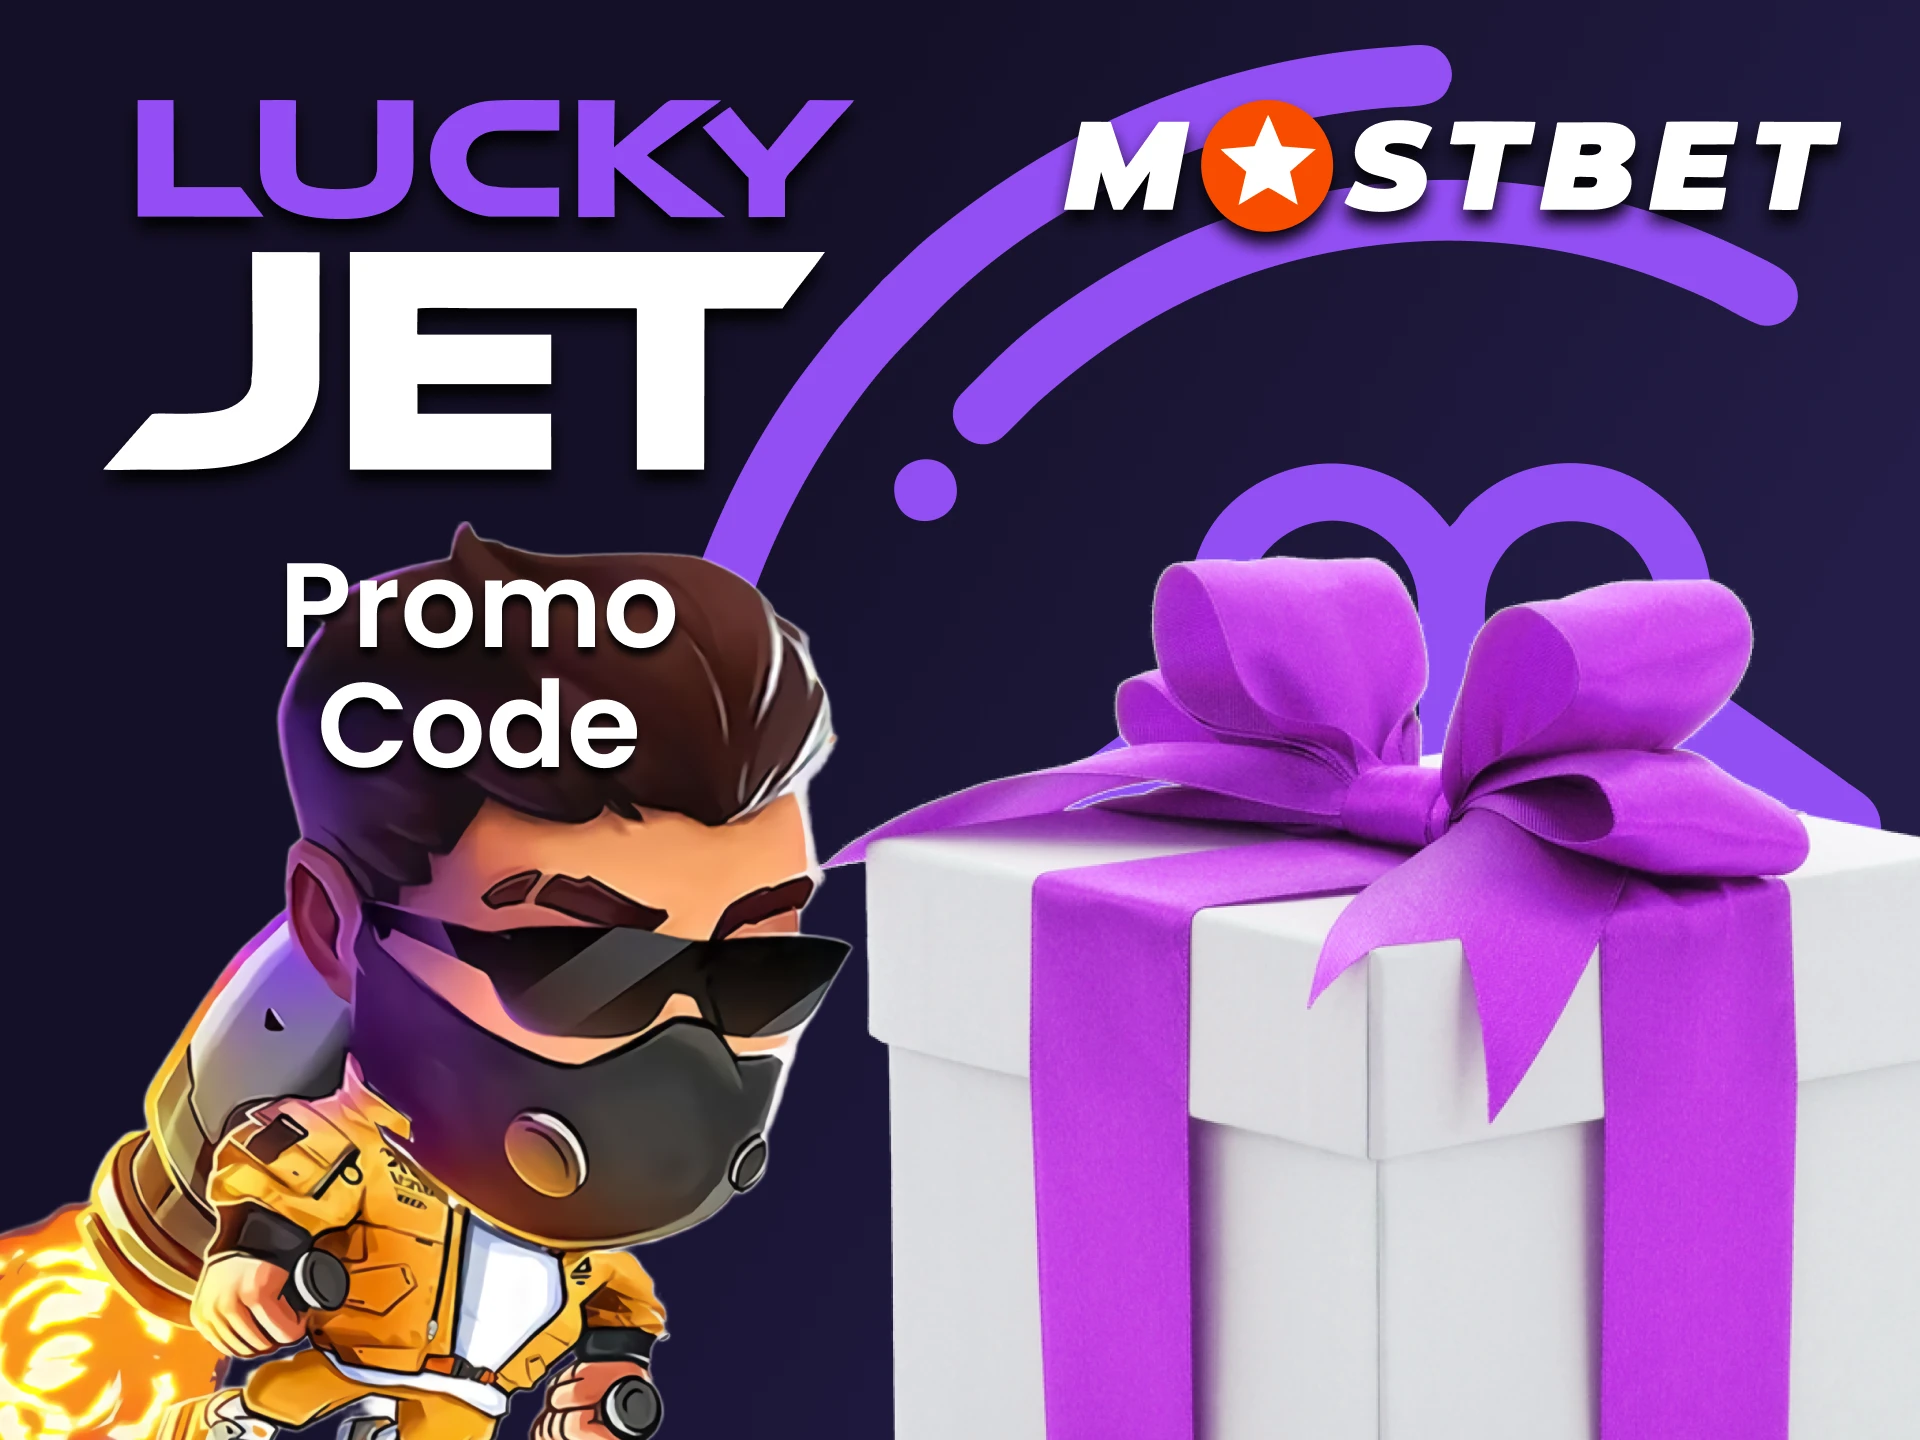 Get a bonus using Mostbet promo code for Lucky Jet.